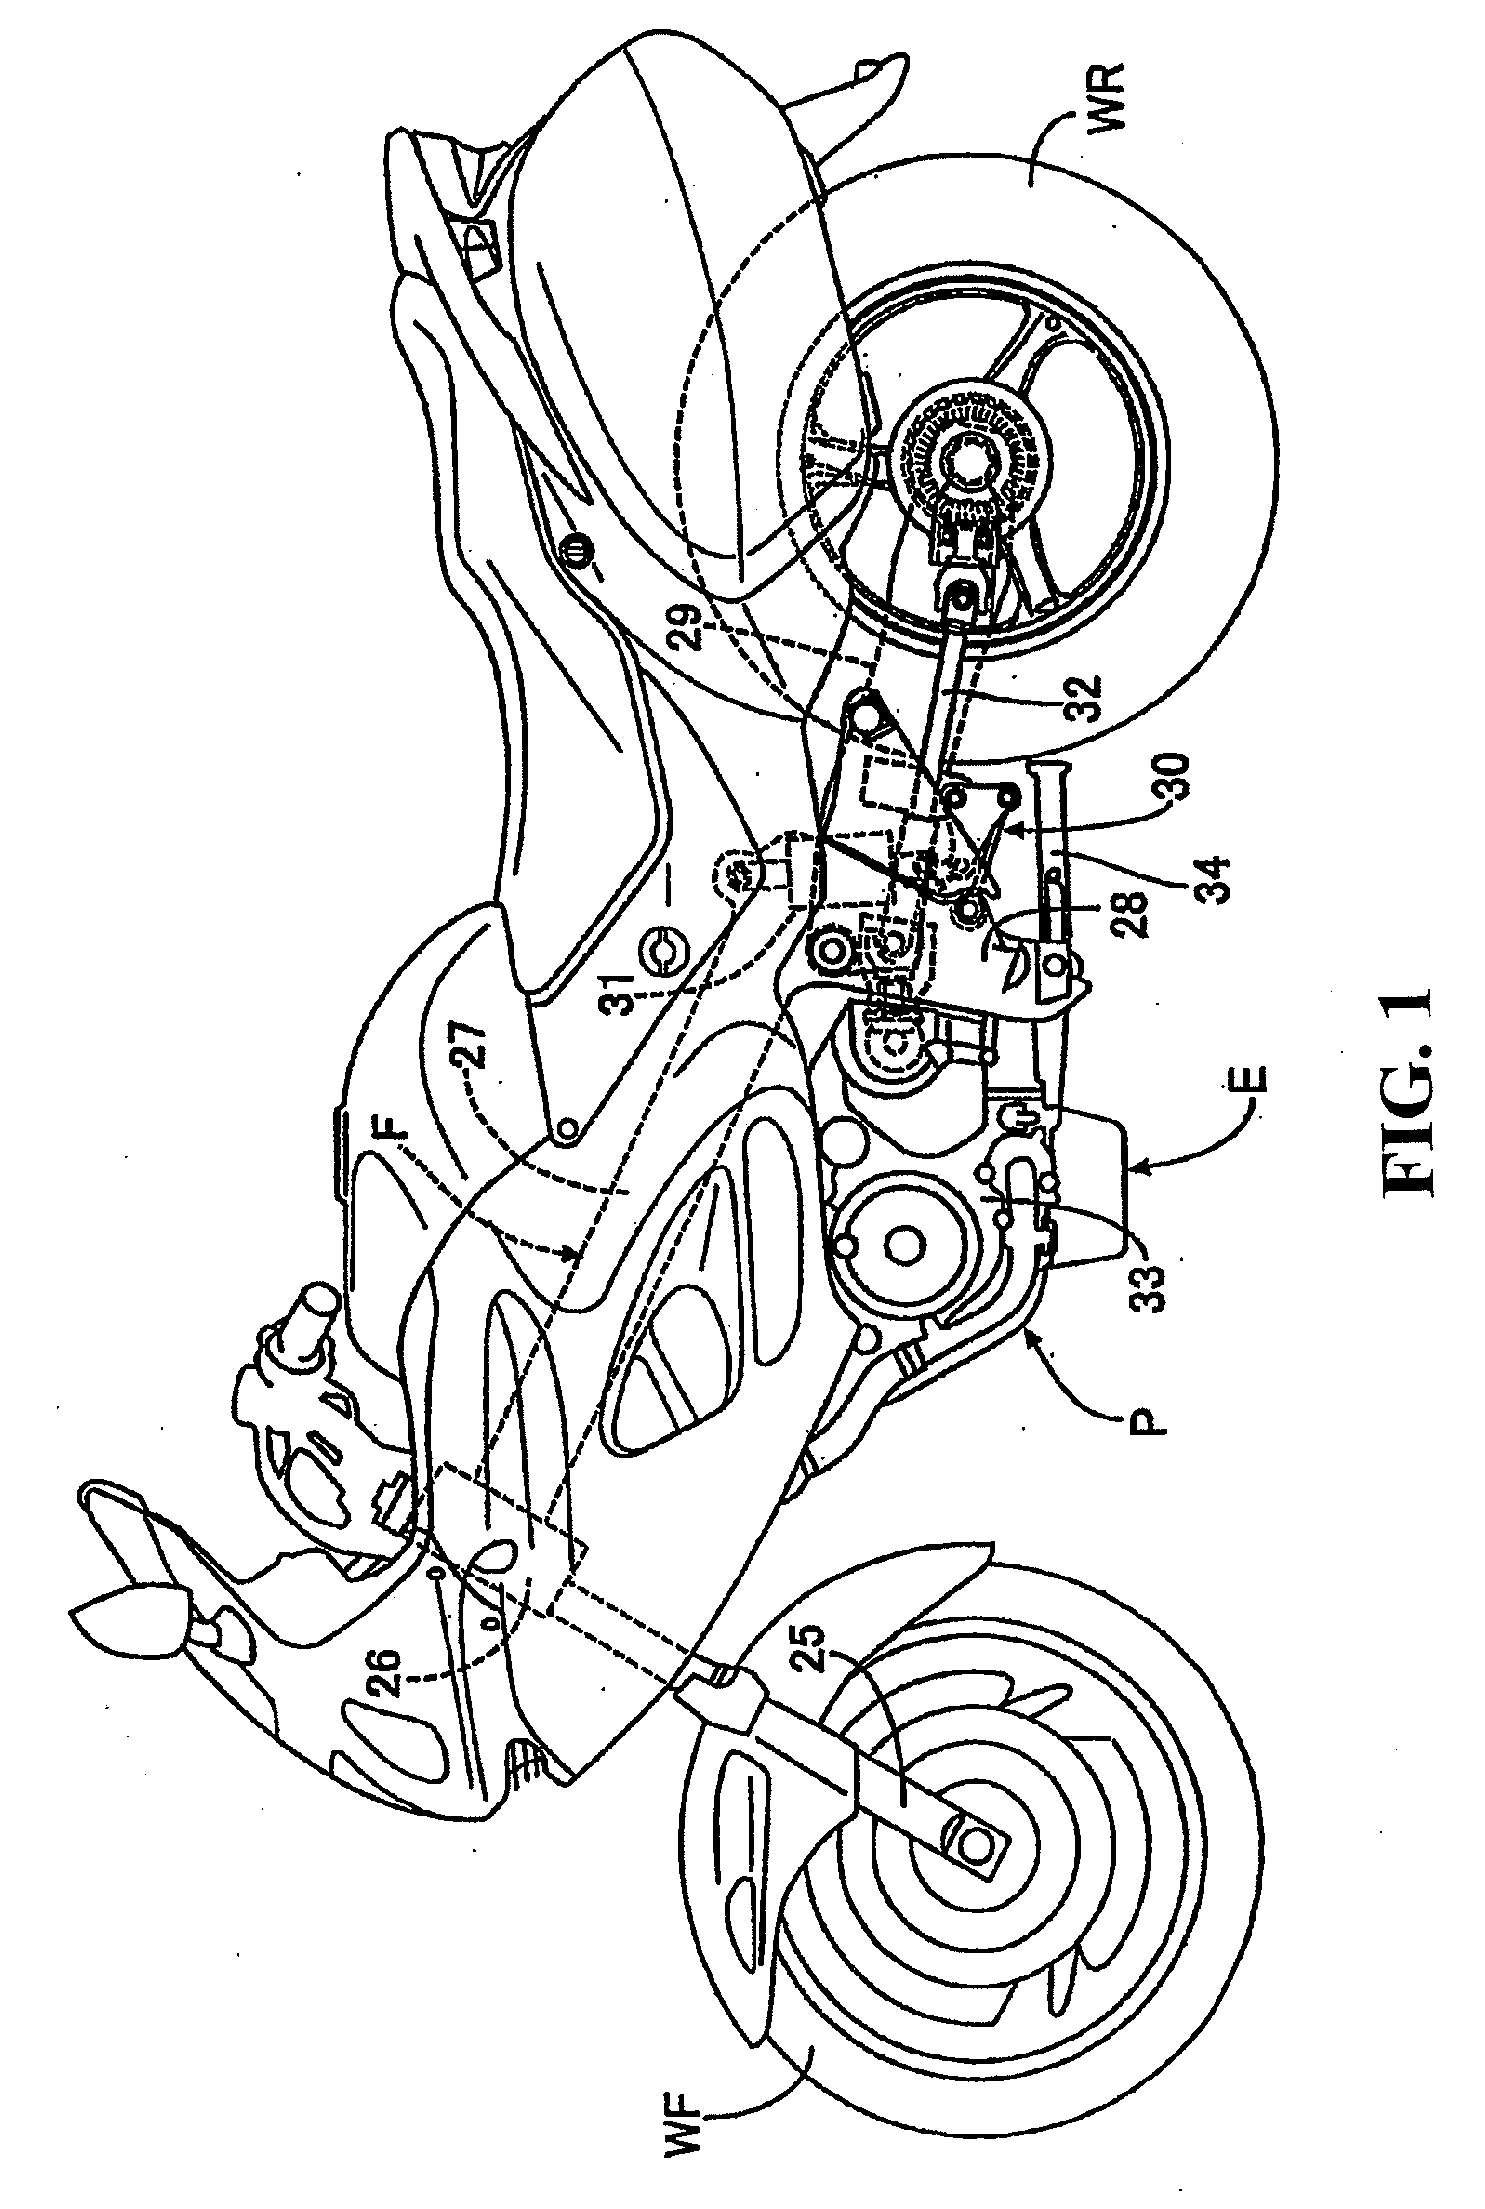 Motorcycle-use power unit